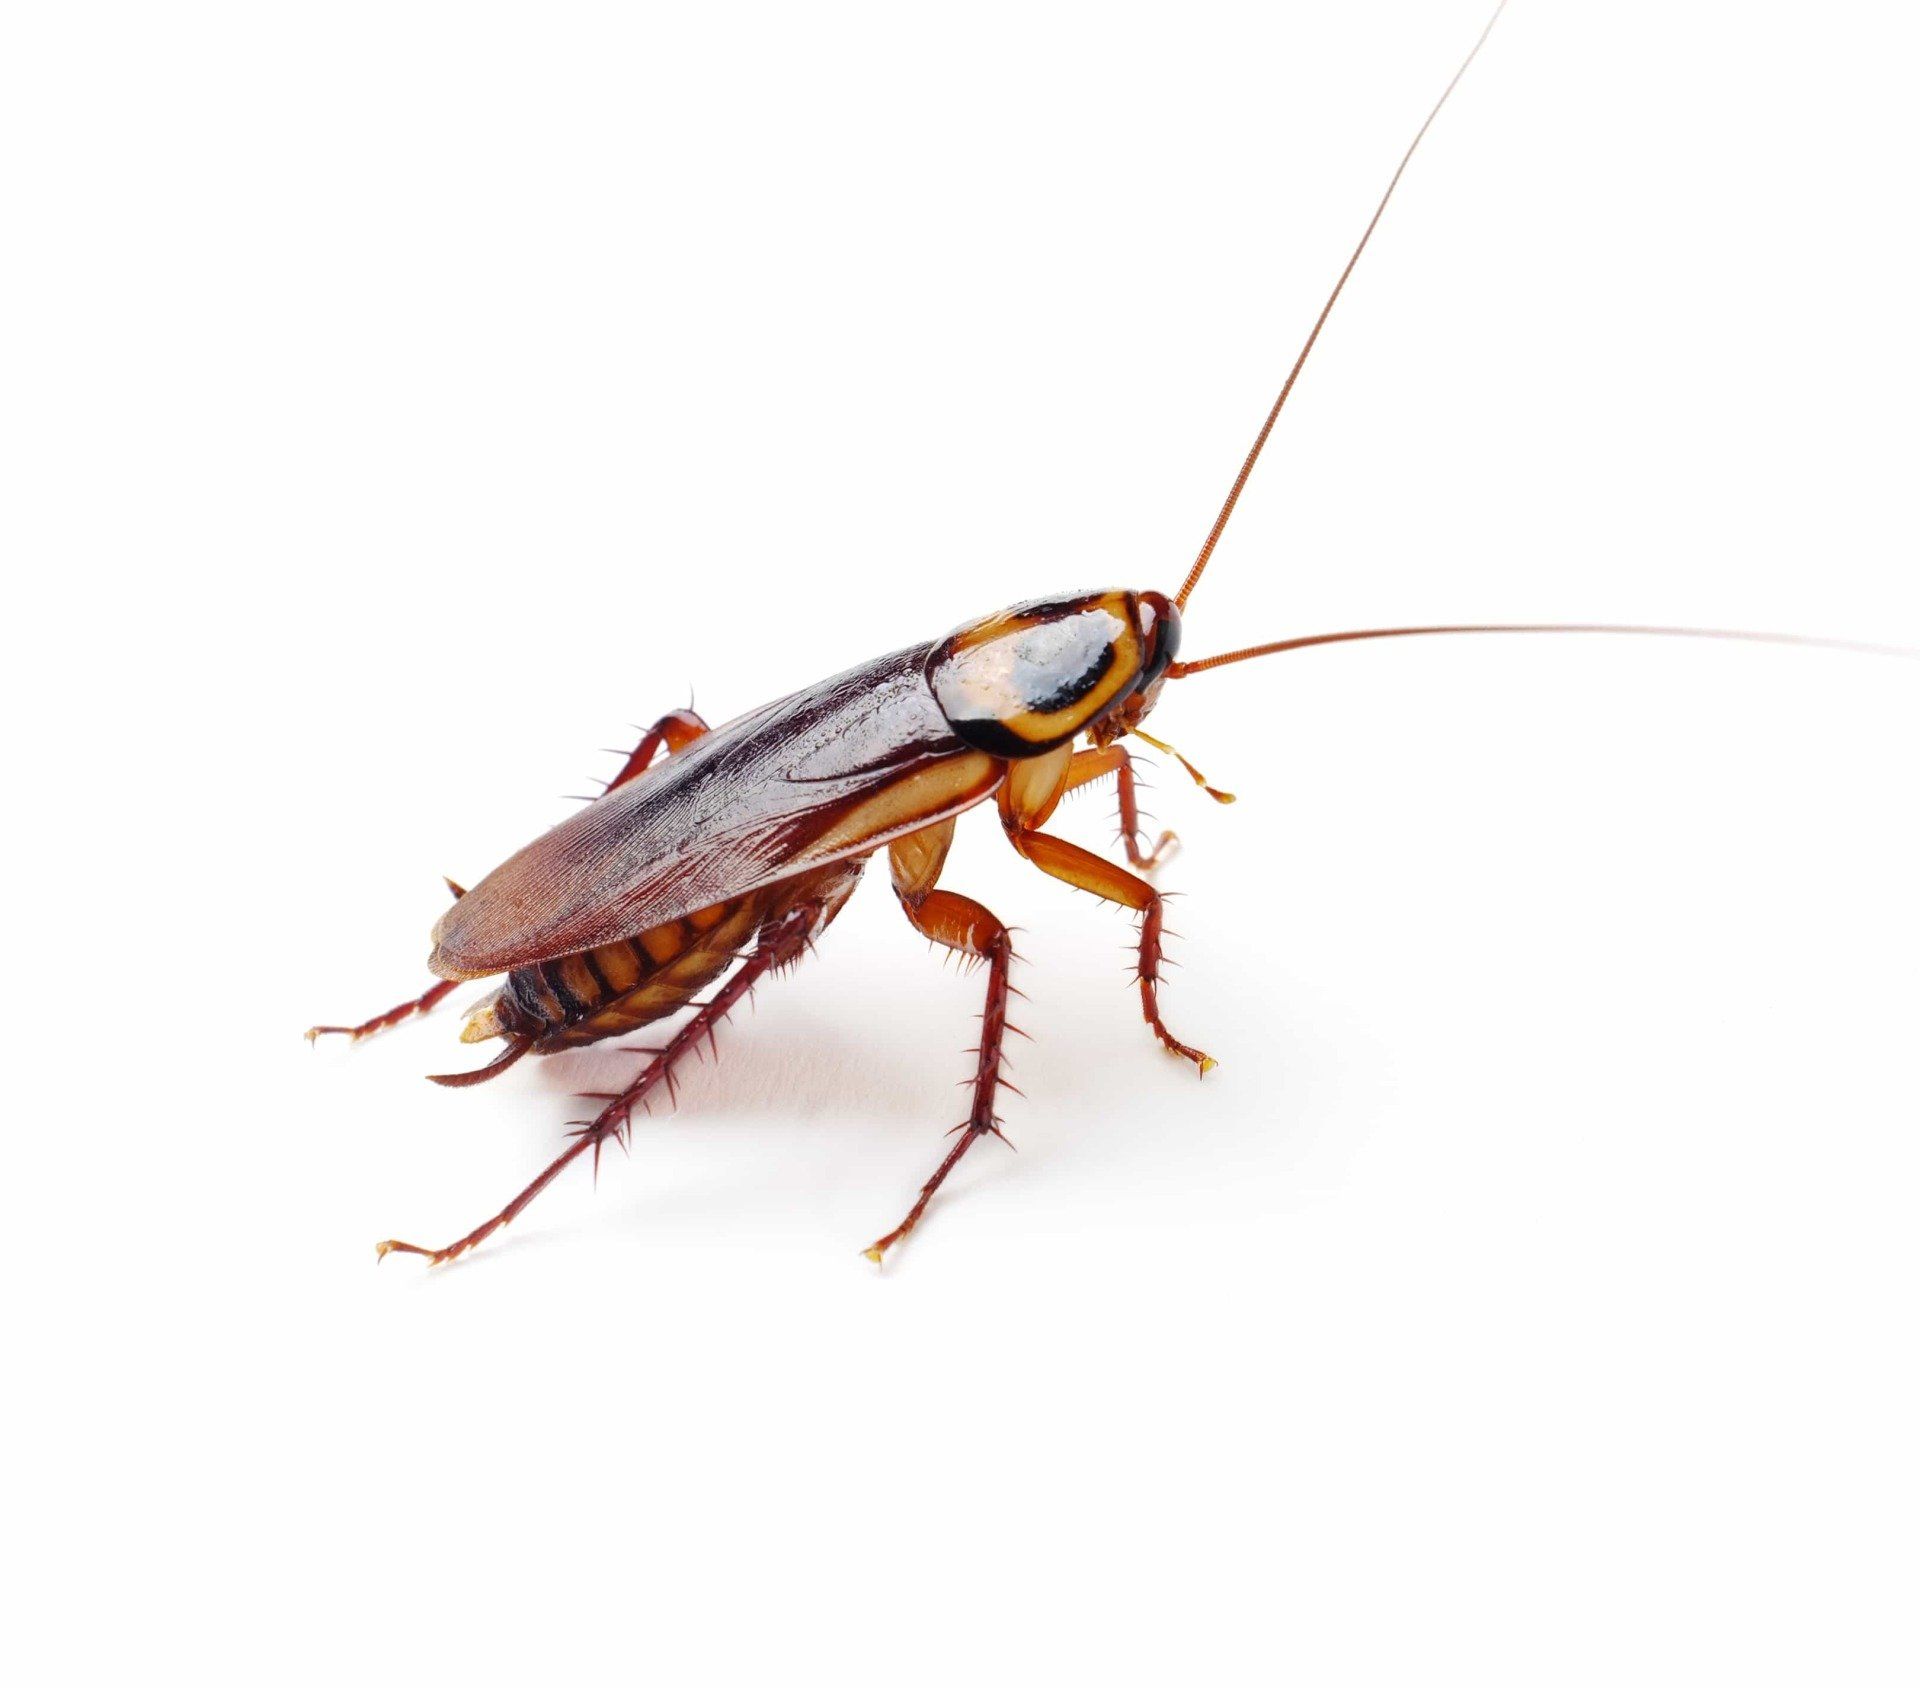 cucaracha americana Periplaneta americana